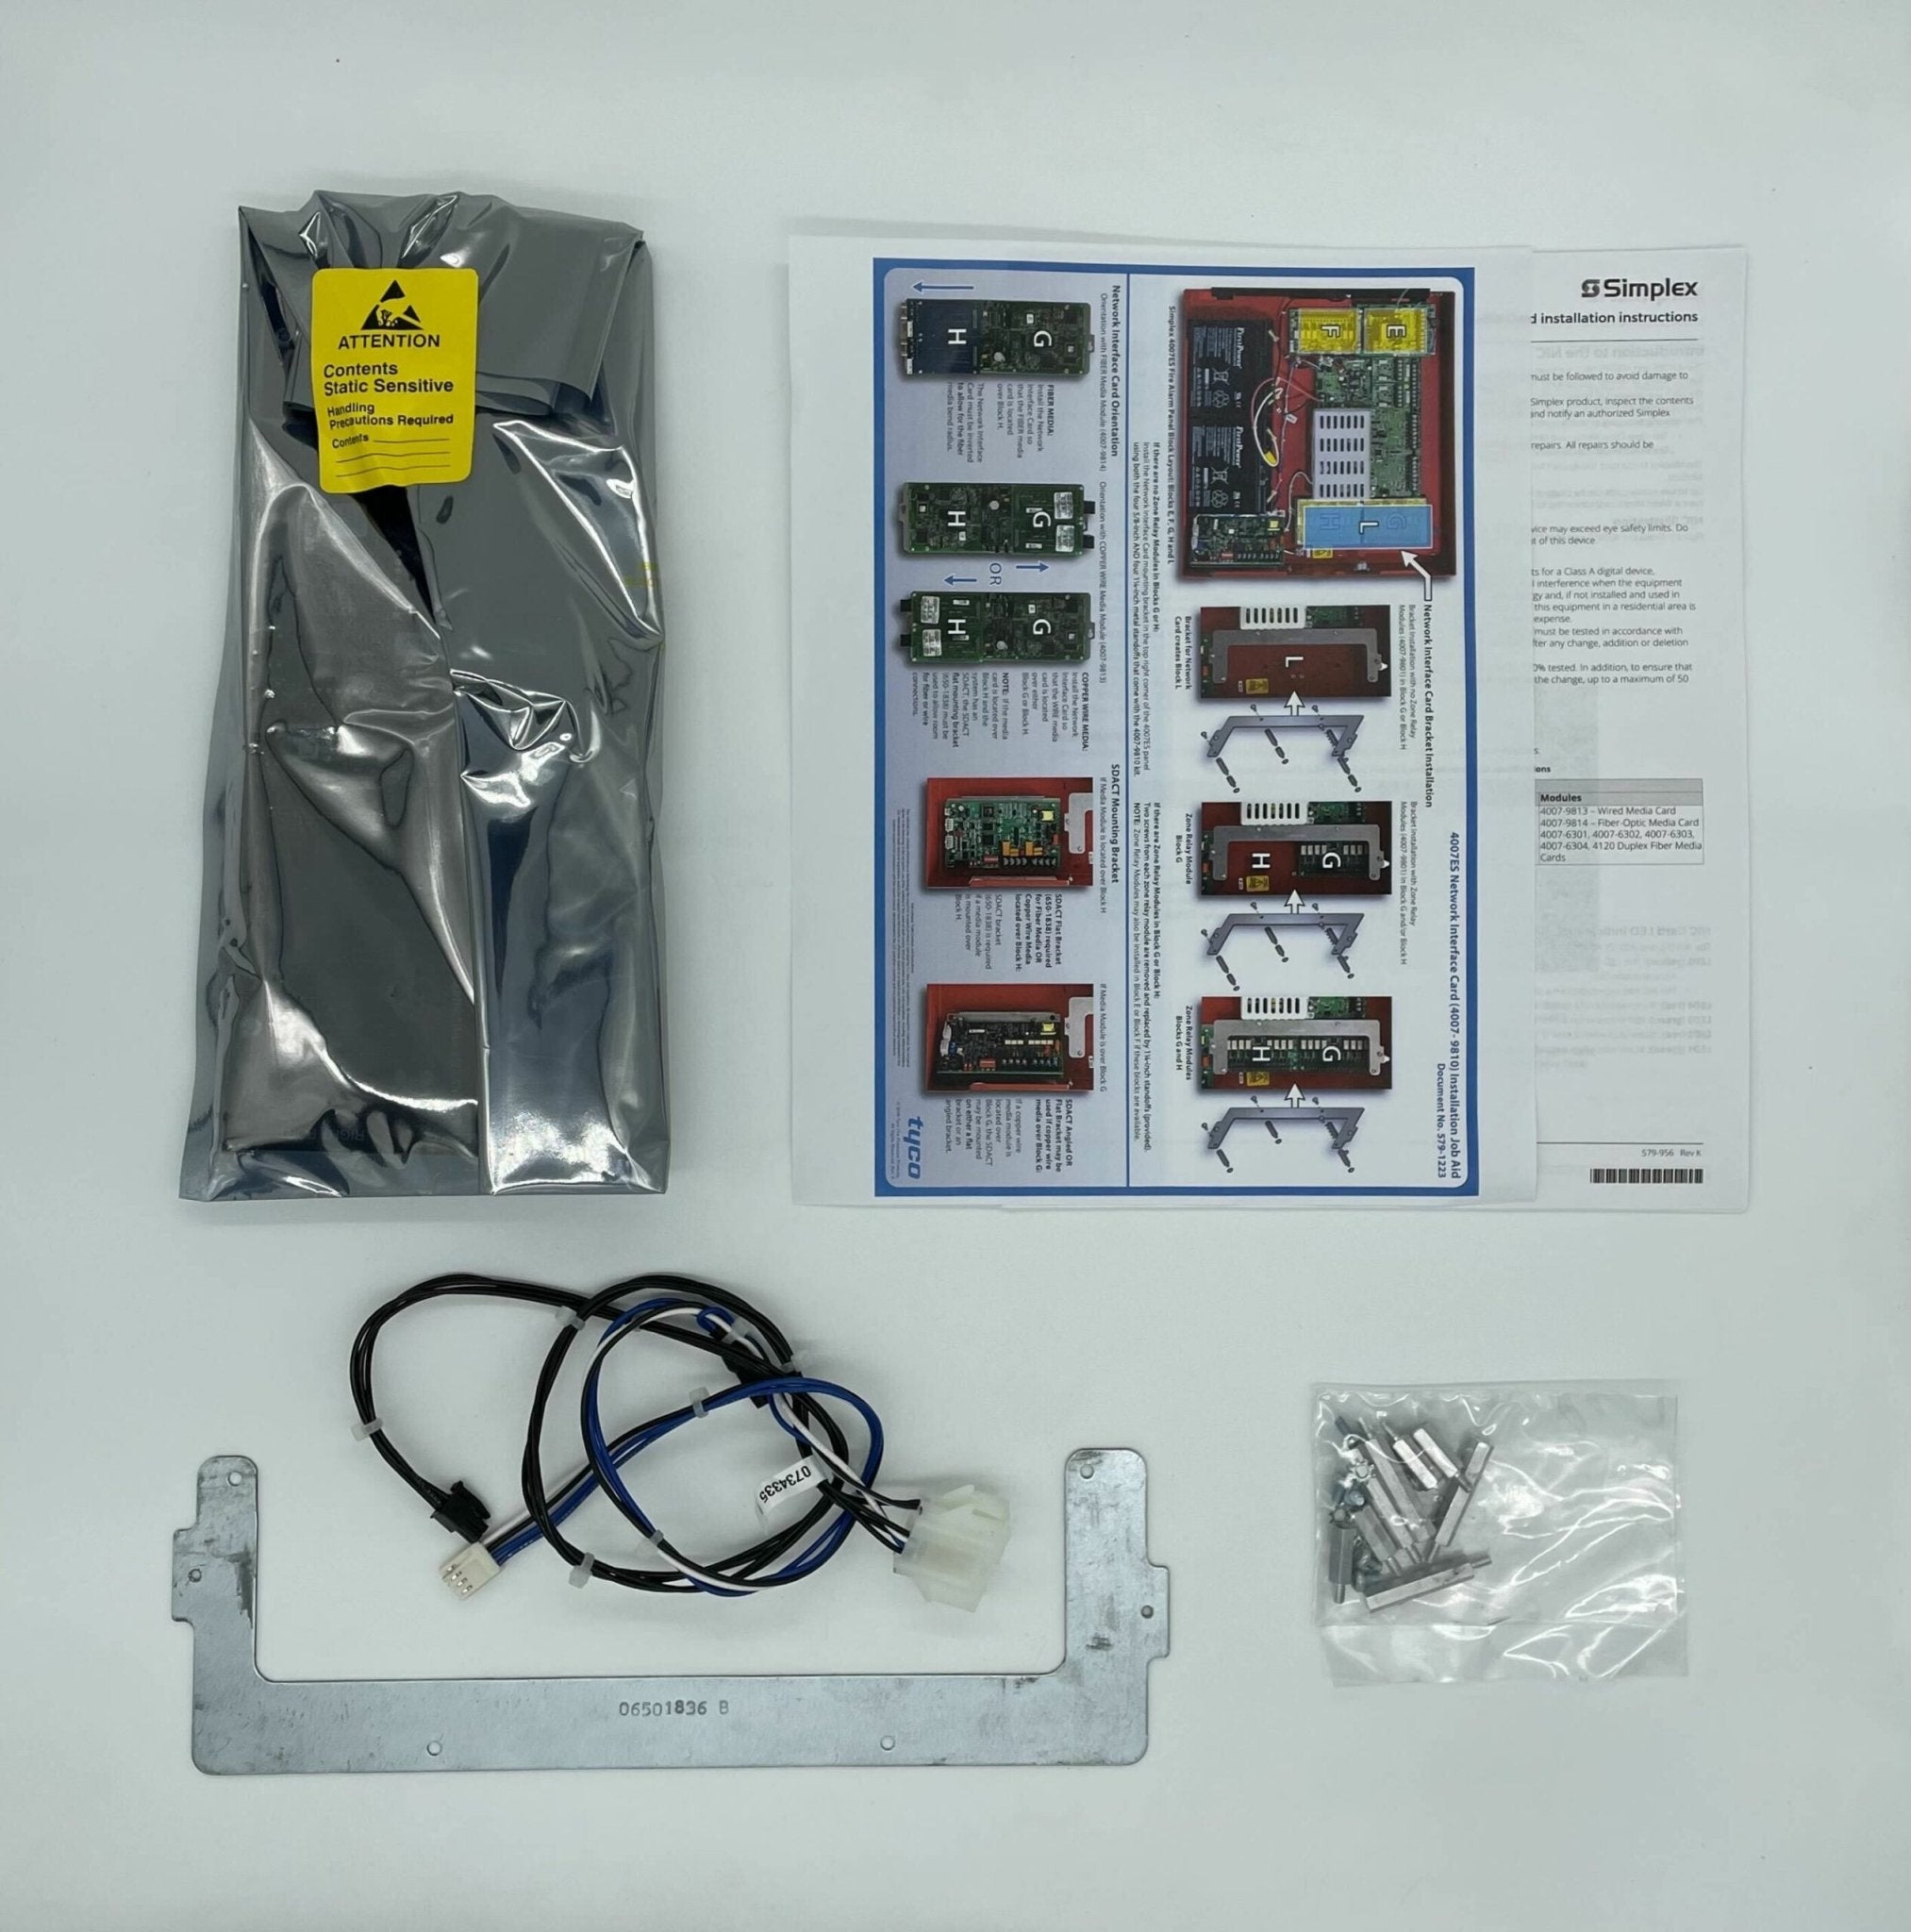 Simplex 4007-9810 Modular Nic - The Fire Alarm Supplier